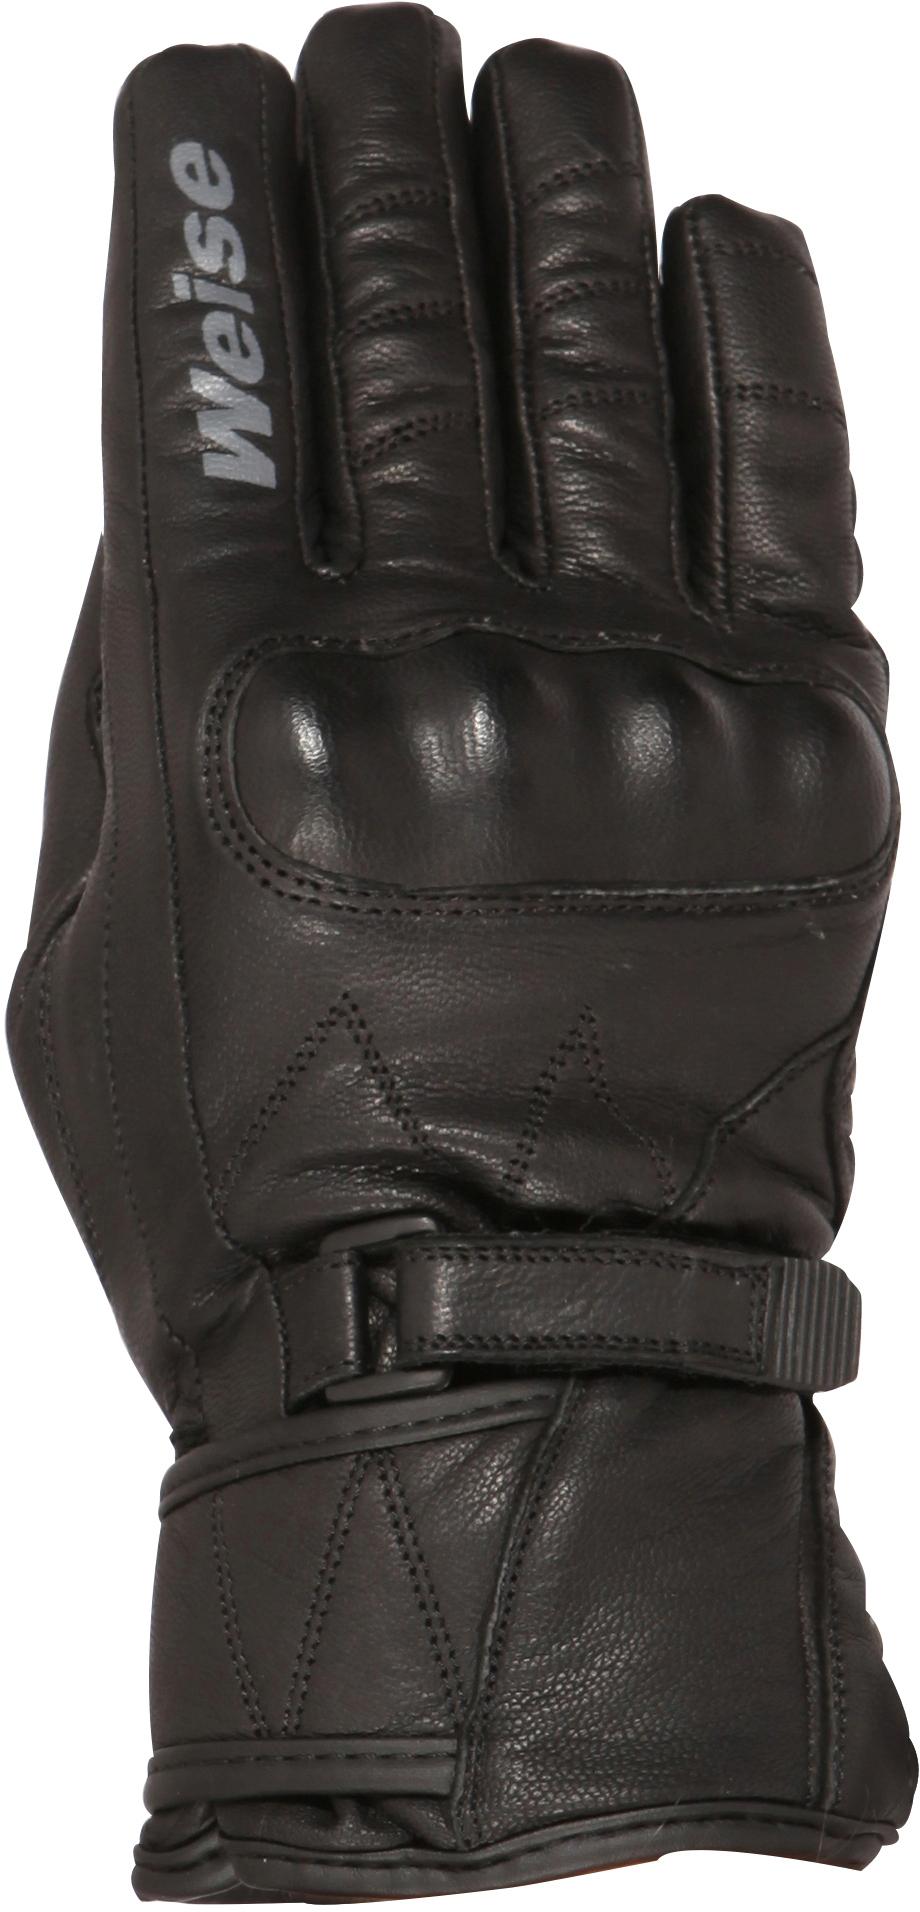 Weise Ripley Ladies Gloves Black Medium